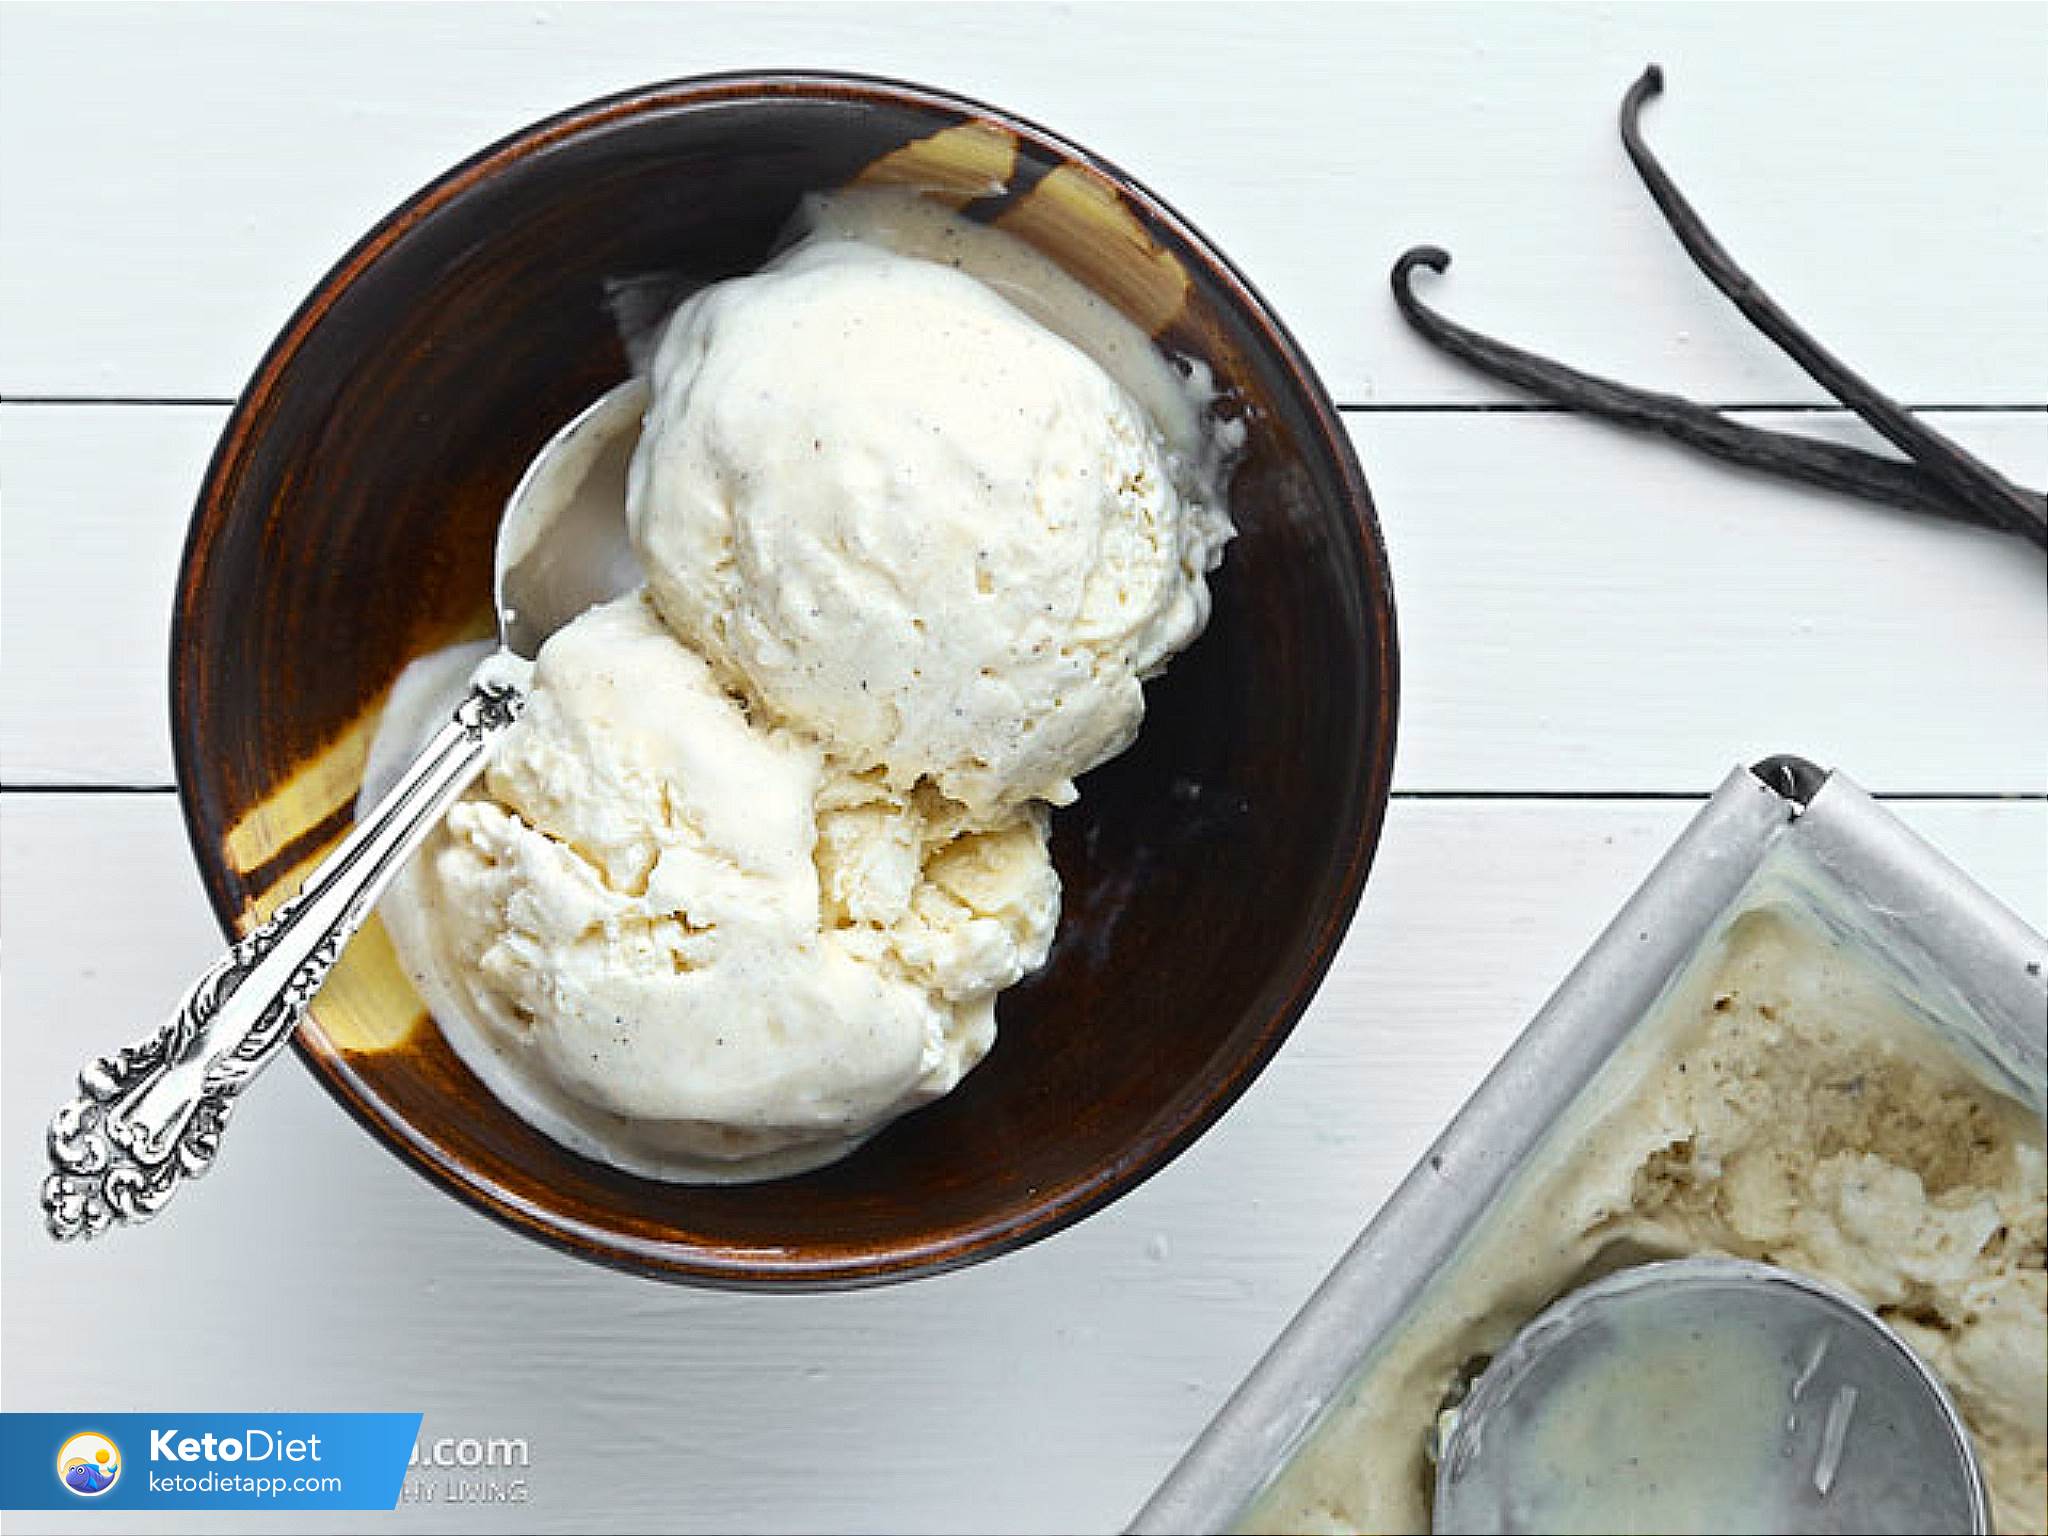 https://ketodietapp.com/Blog/lchf-soc/no-churn-vanilla-keto-ice-cream-6415341D.jpg